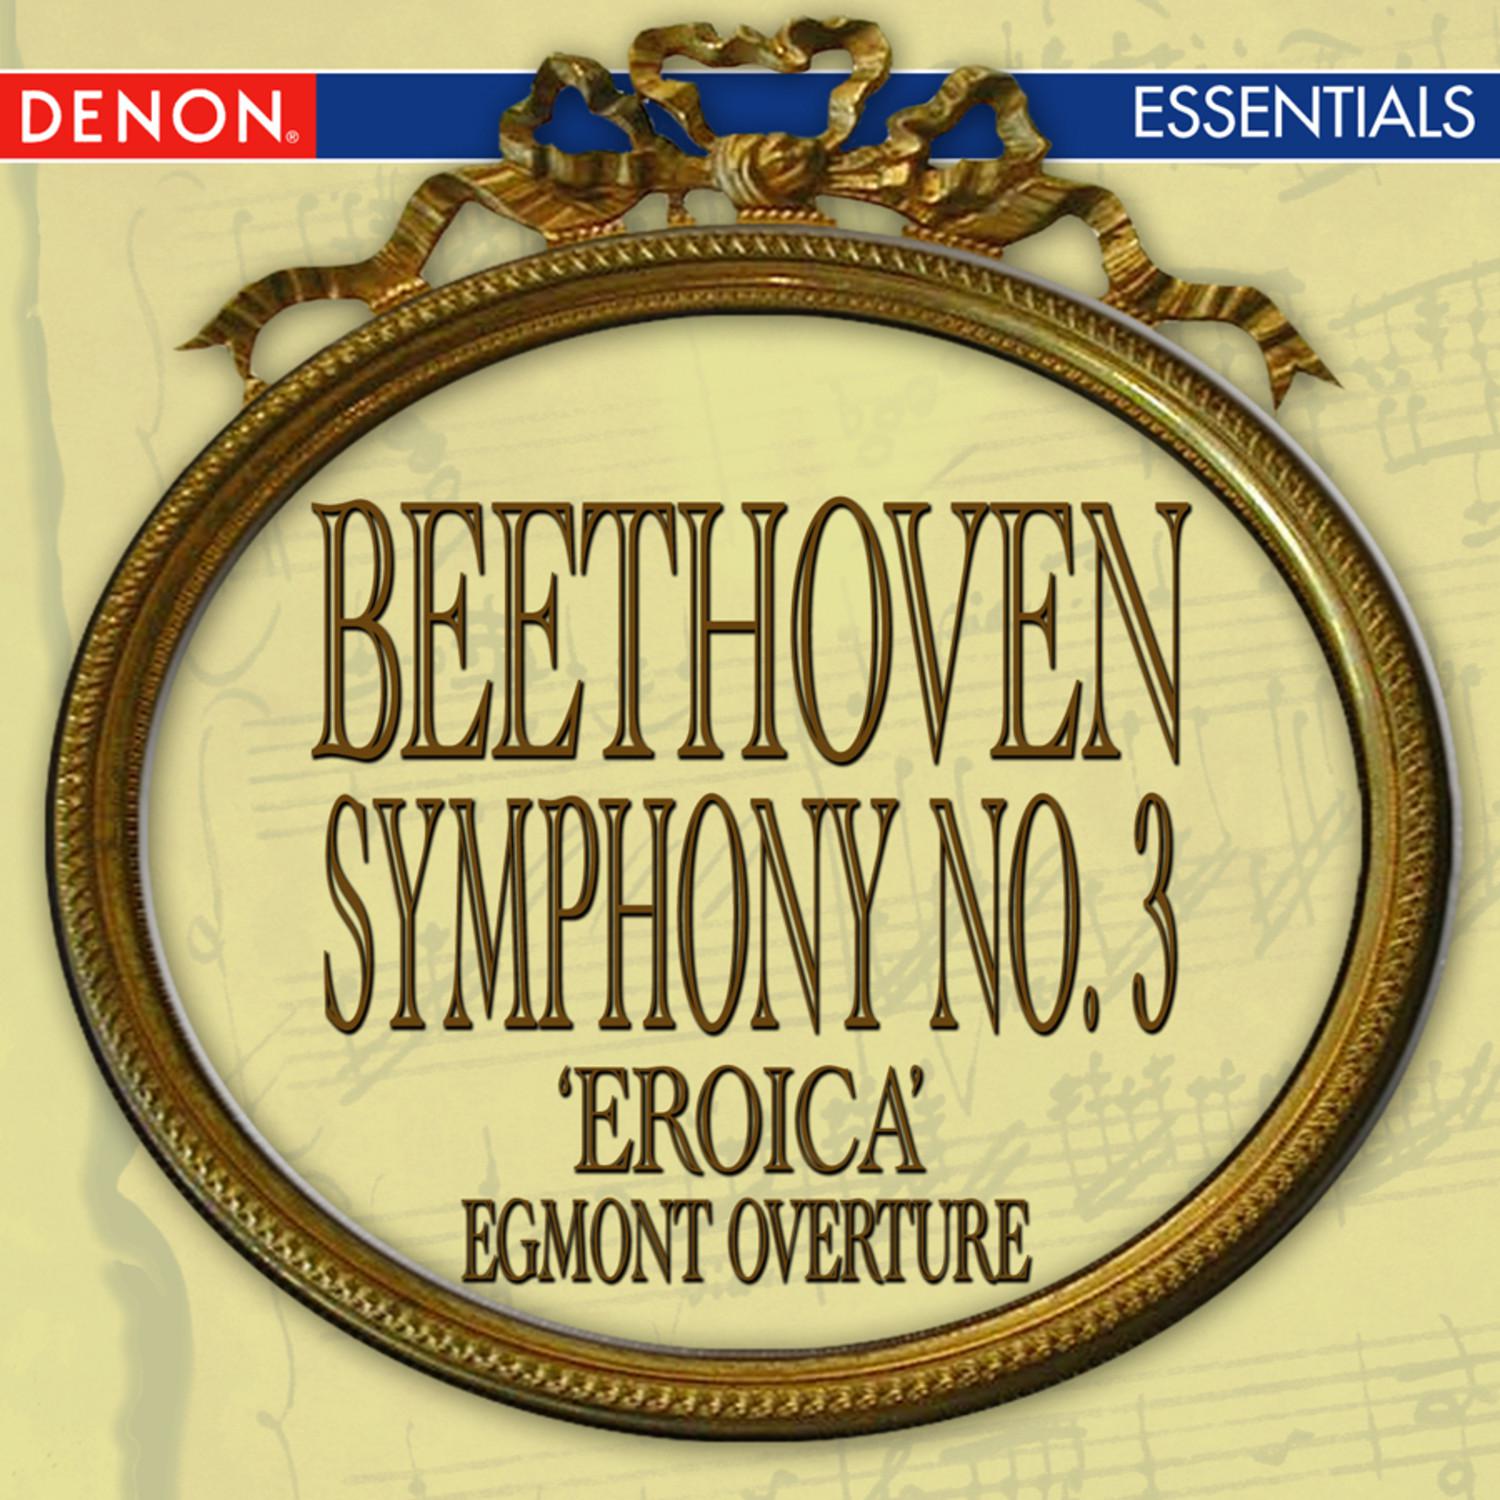 Beethoven: Symphony No. 3 'Eroica' - Egmont Overture